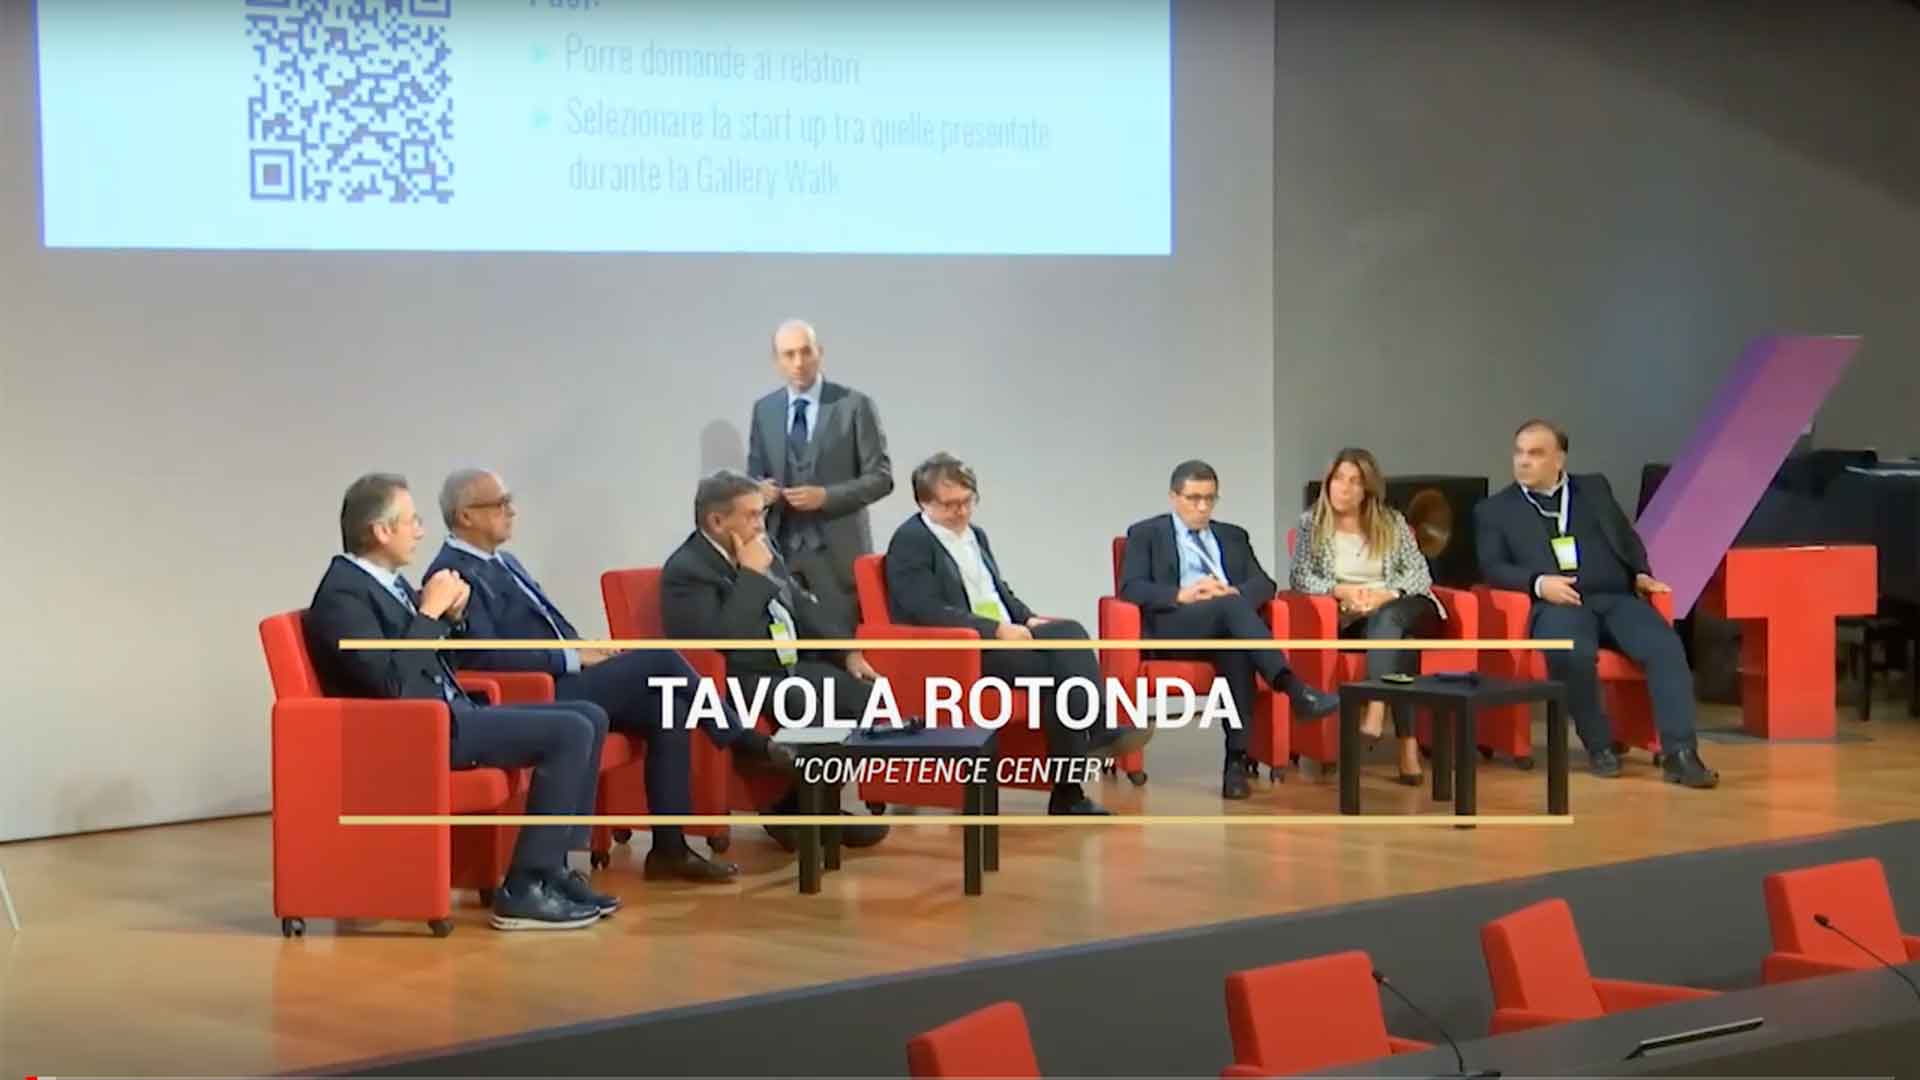 Tavola-rotonda-Competence-center-thumbnail